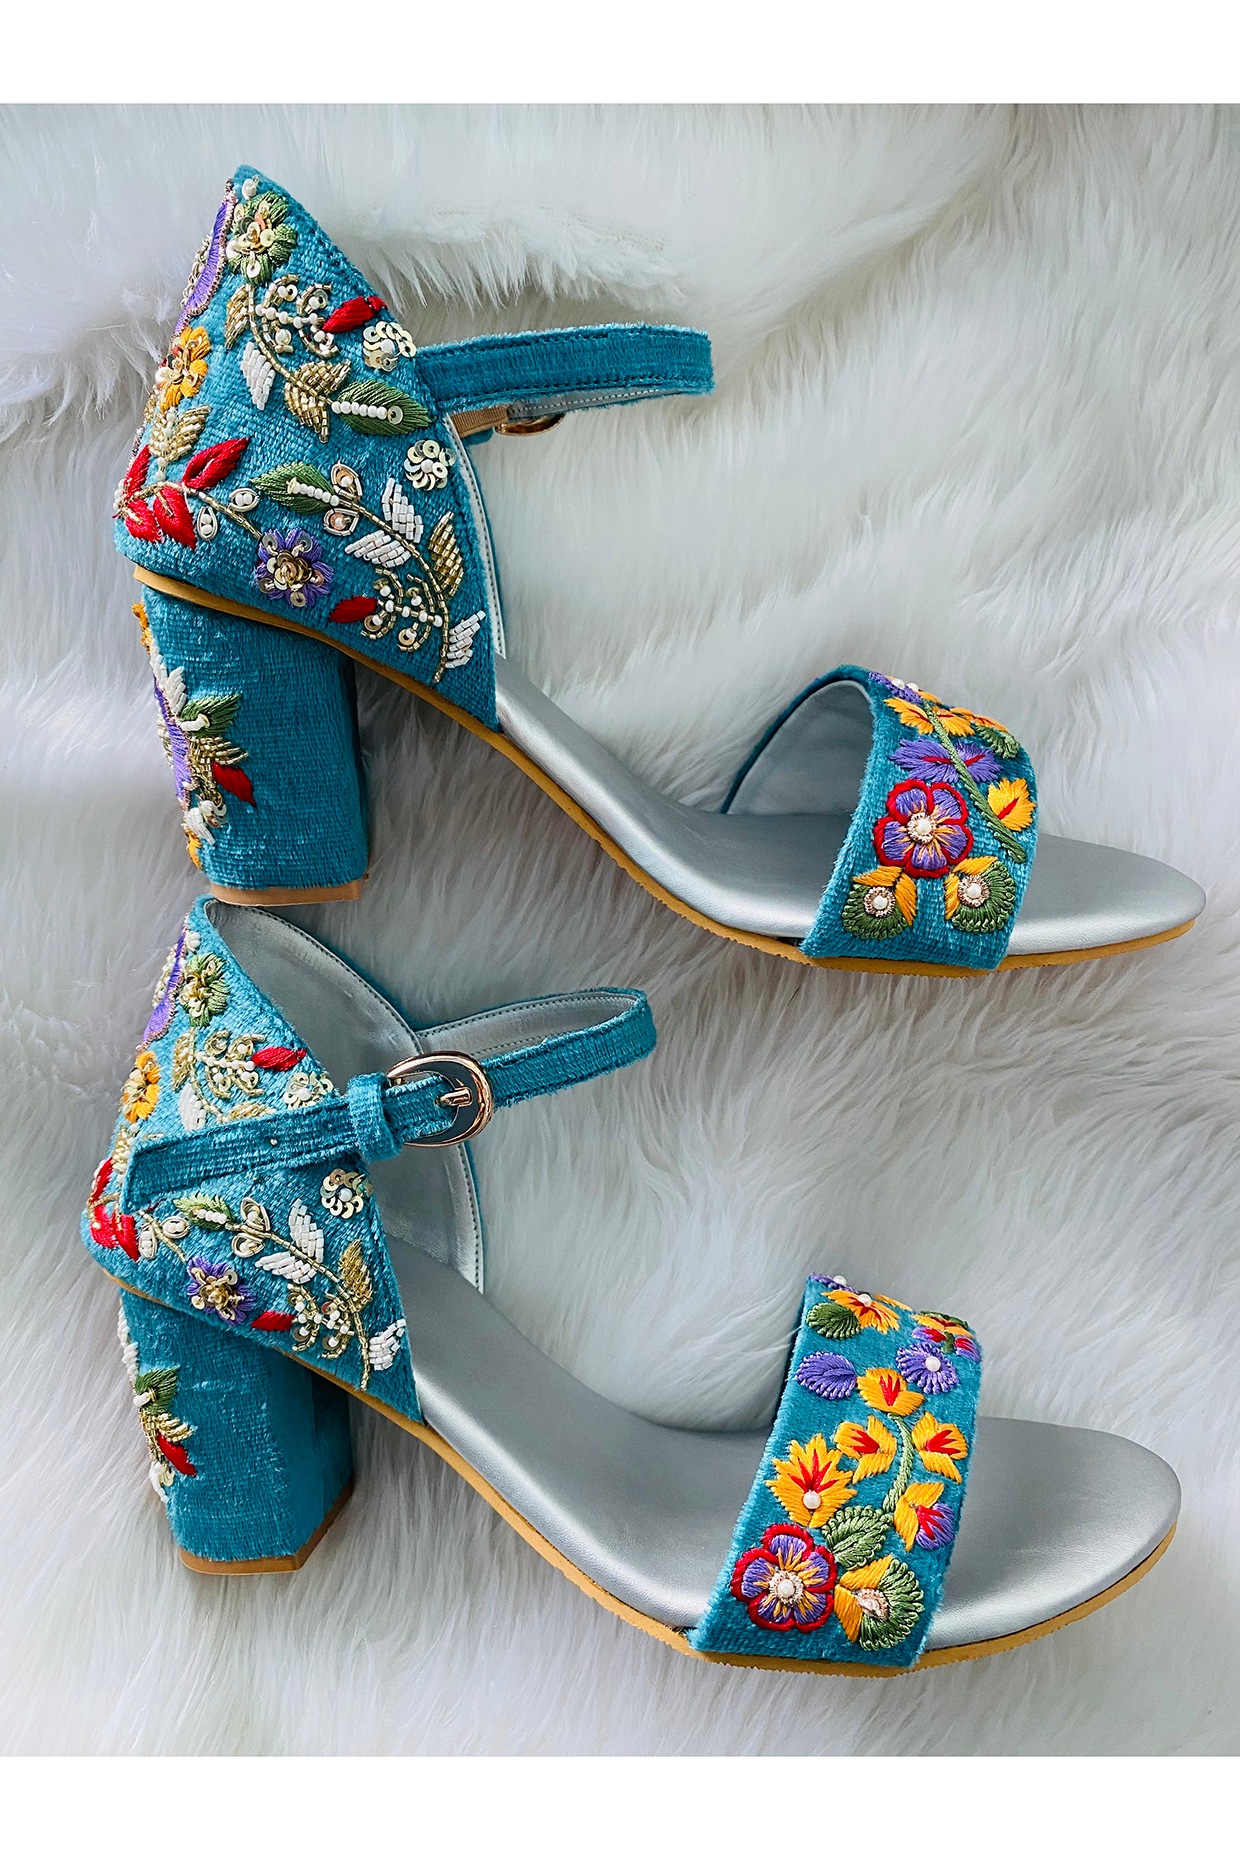 Jessica Simpson | Shoes | Jessica Simpson Narella Floral Chunky Heel Sandal  | Poshmark